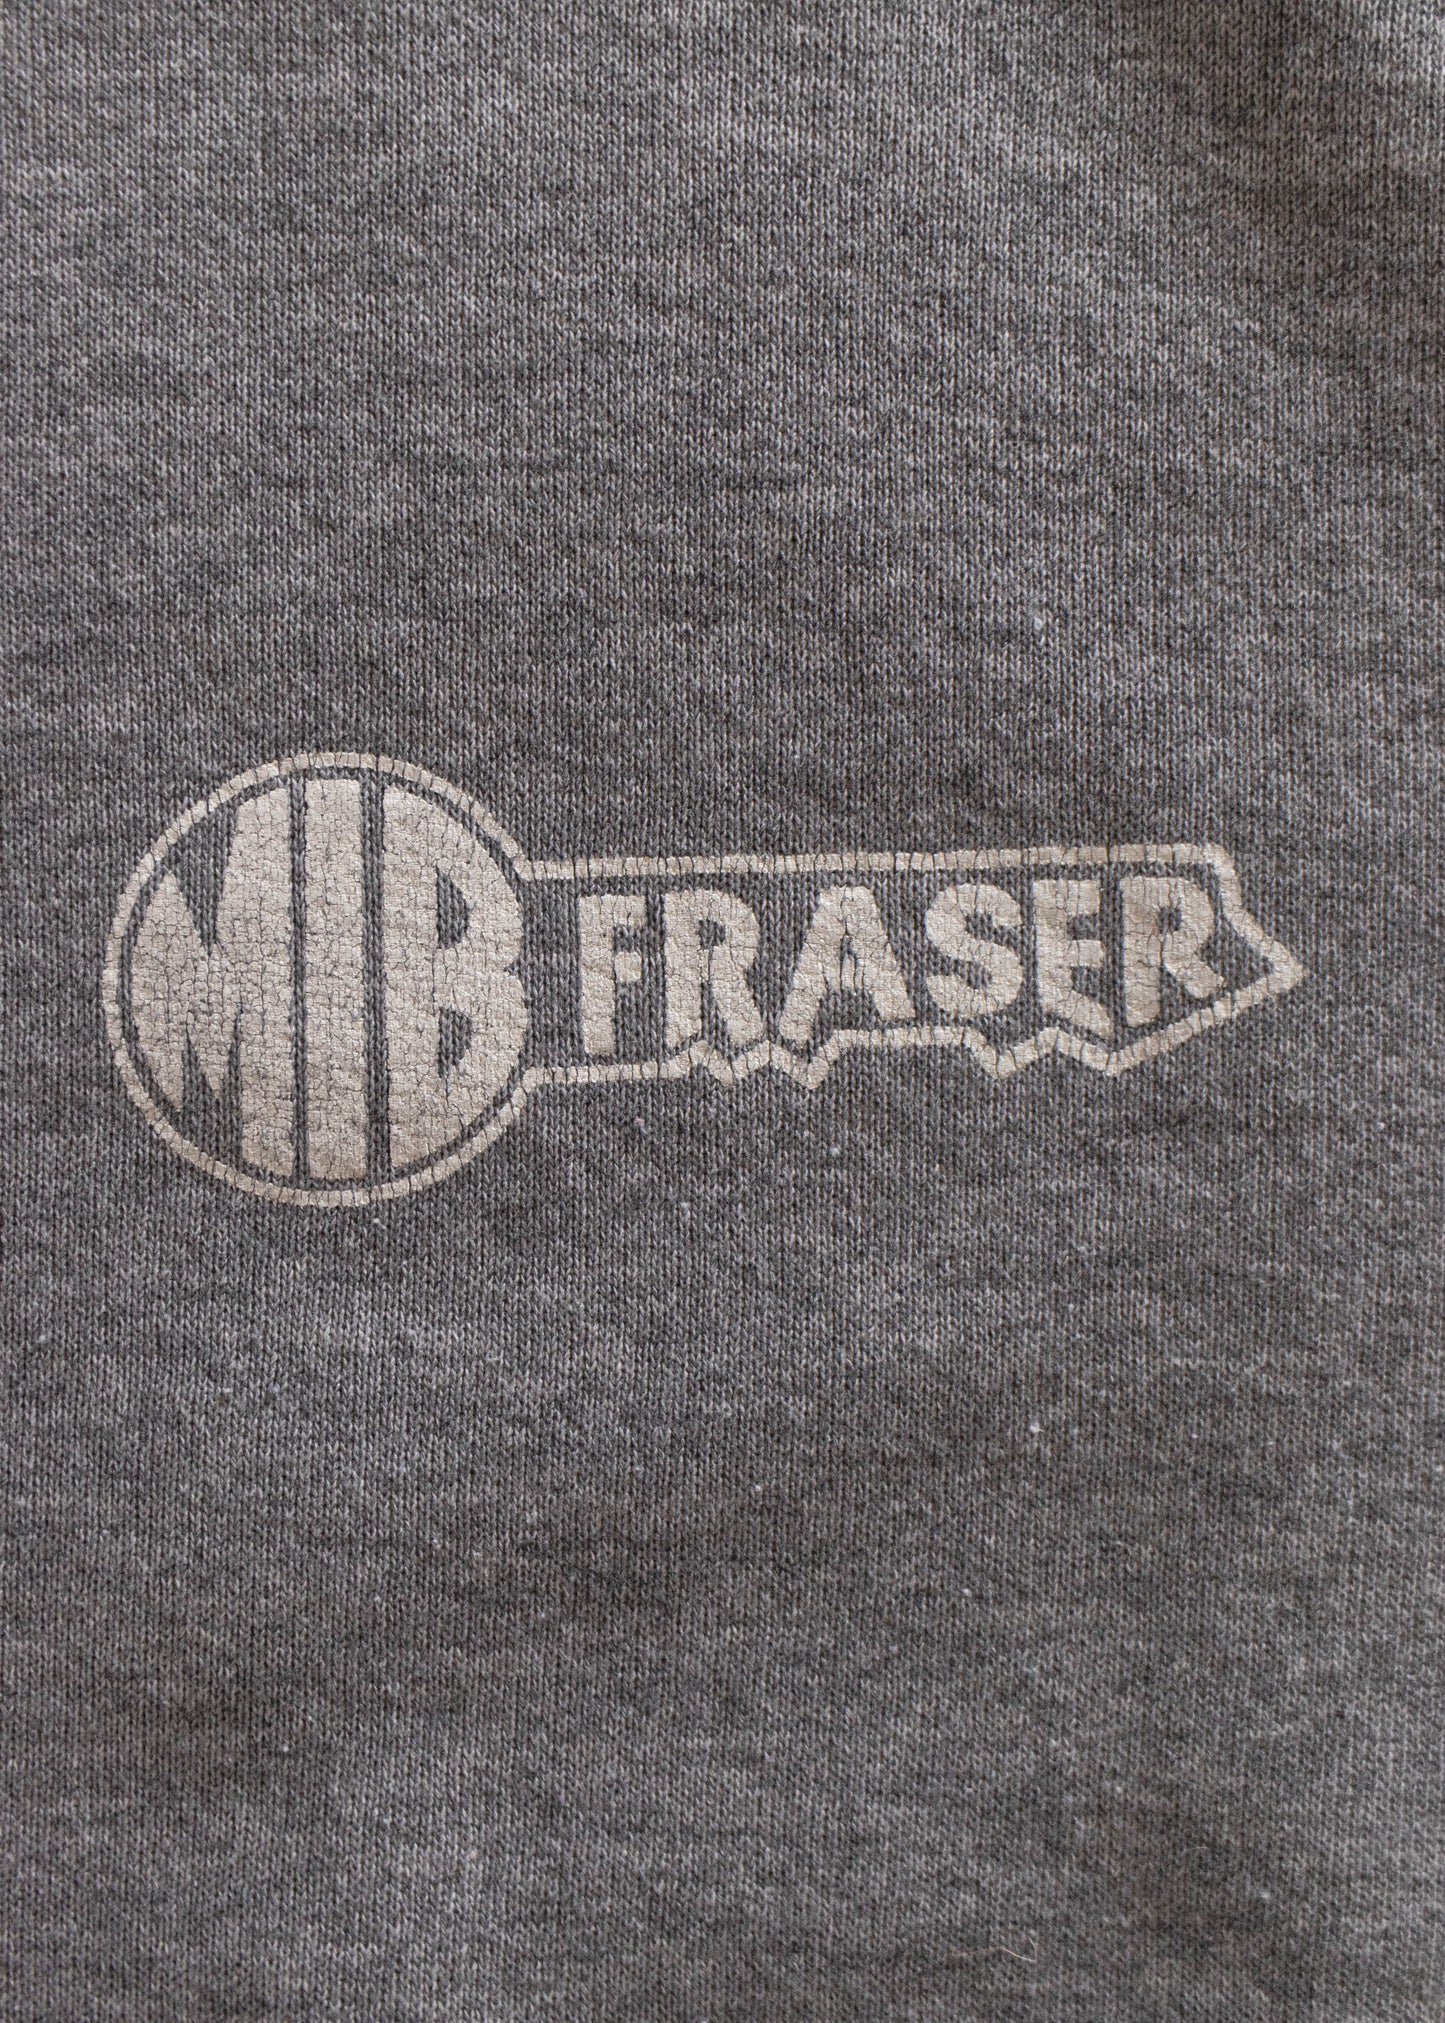 1980s MIB Fraser Sweatshirt Size S/M